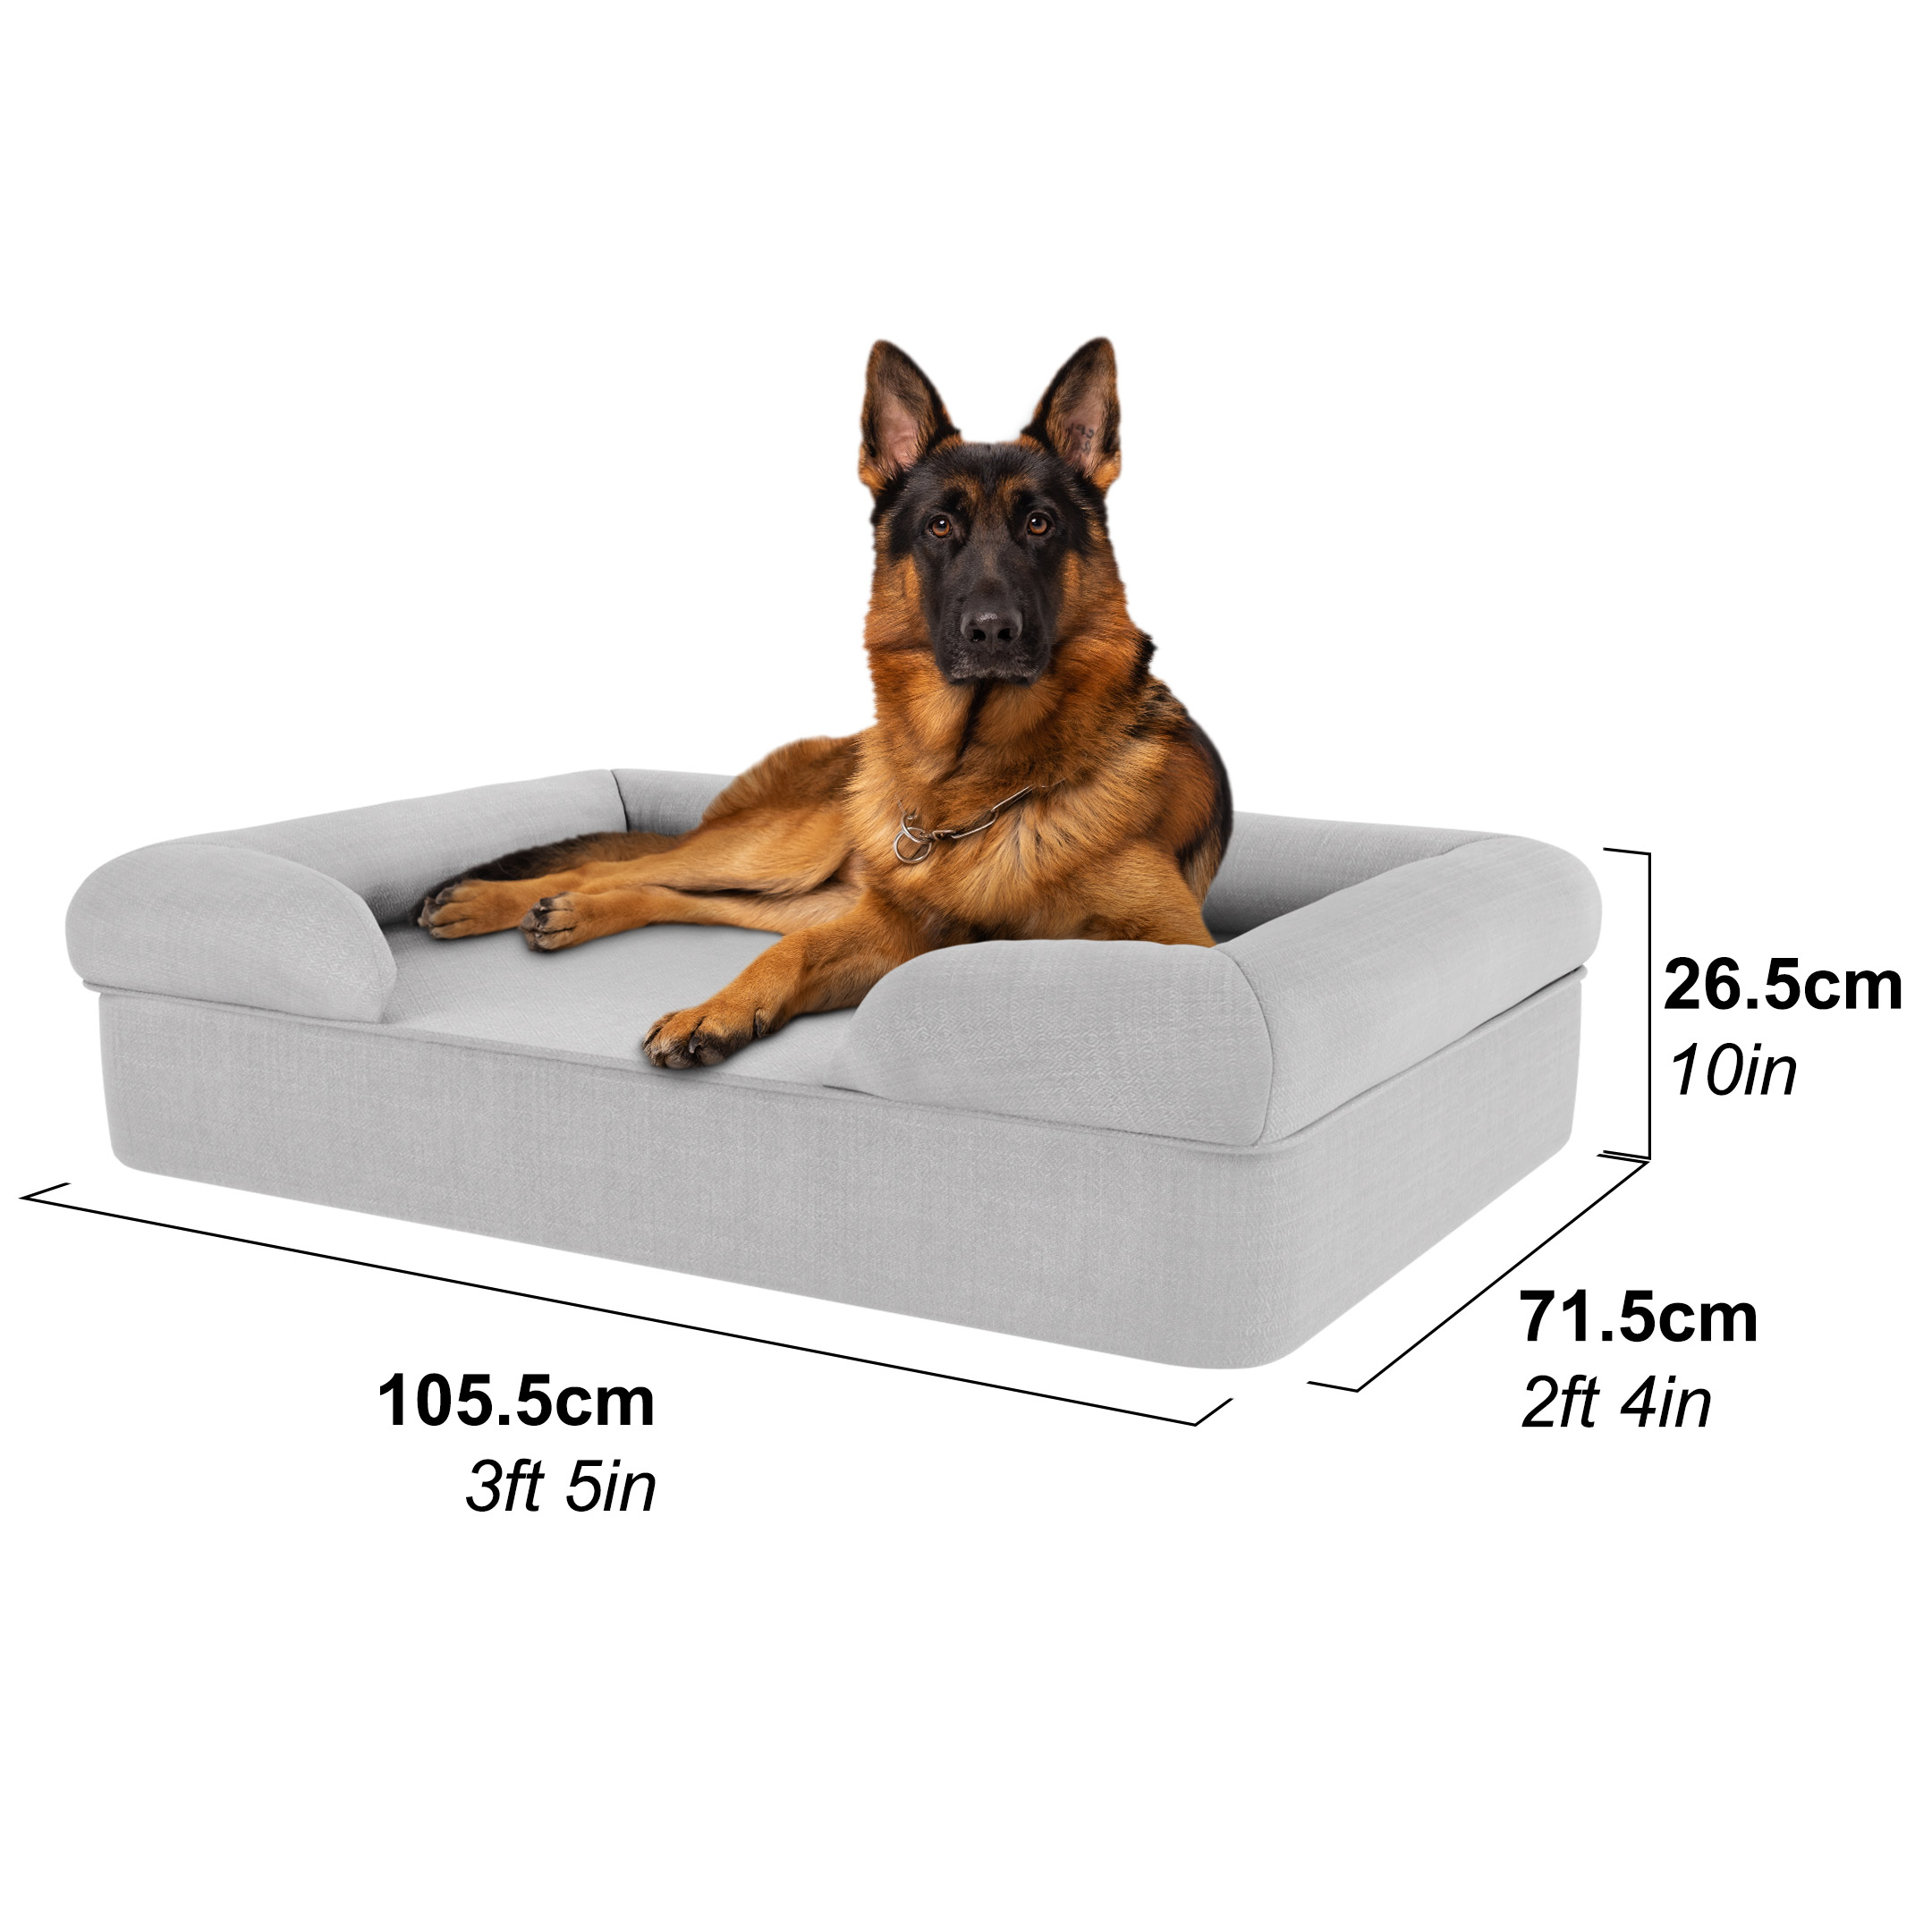 German Shepherd in a large dog bed